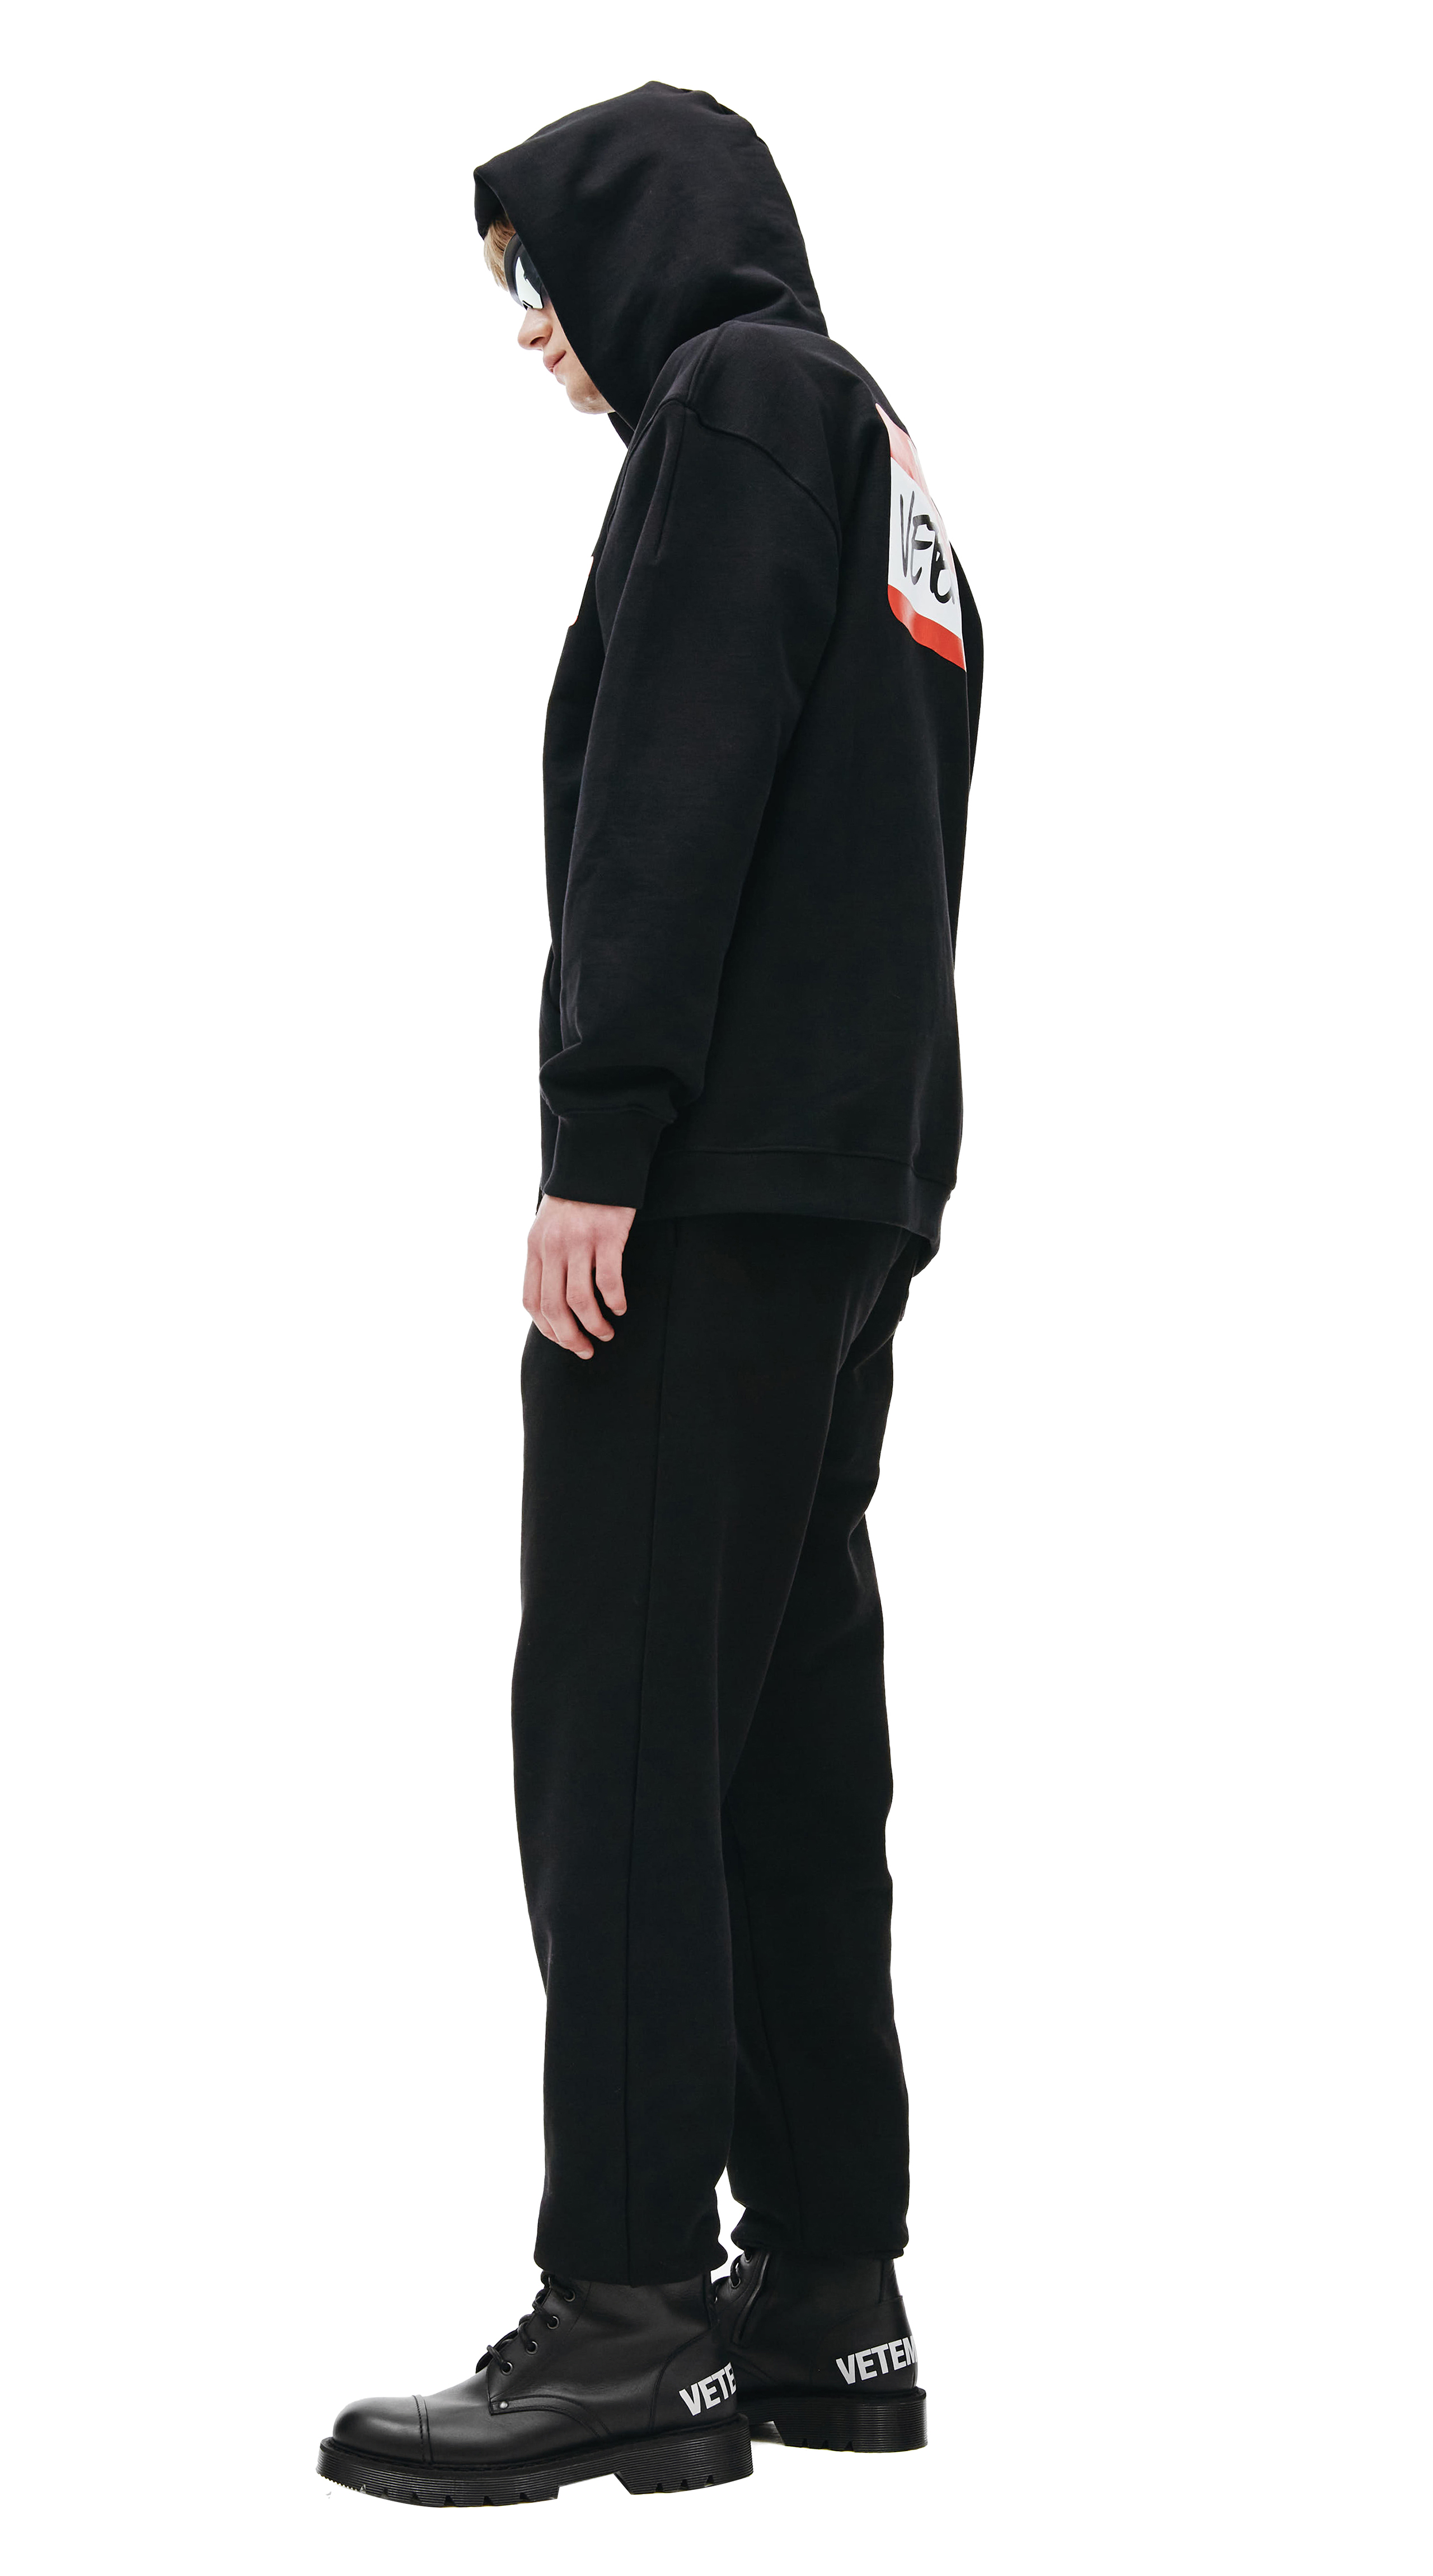 Buy VETEMENTS men black logo hoodie for $785 online on SVMOSCOW 